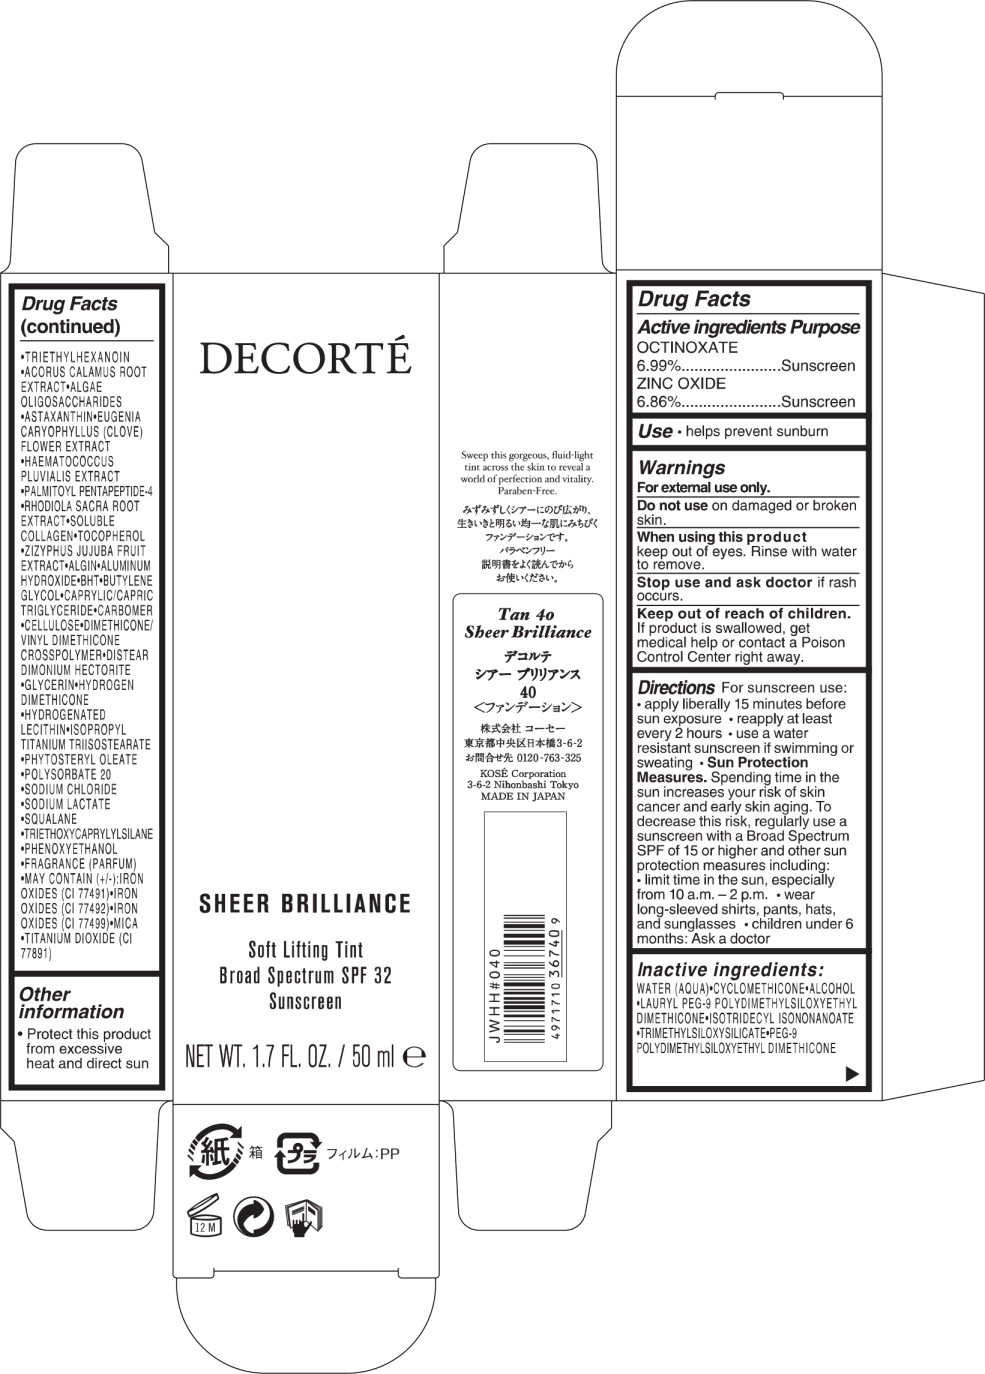 Principal Display Panel - Decorte Sheet Brilliance 40 Level 50 ml Carton Label
